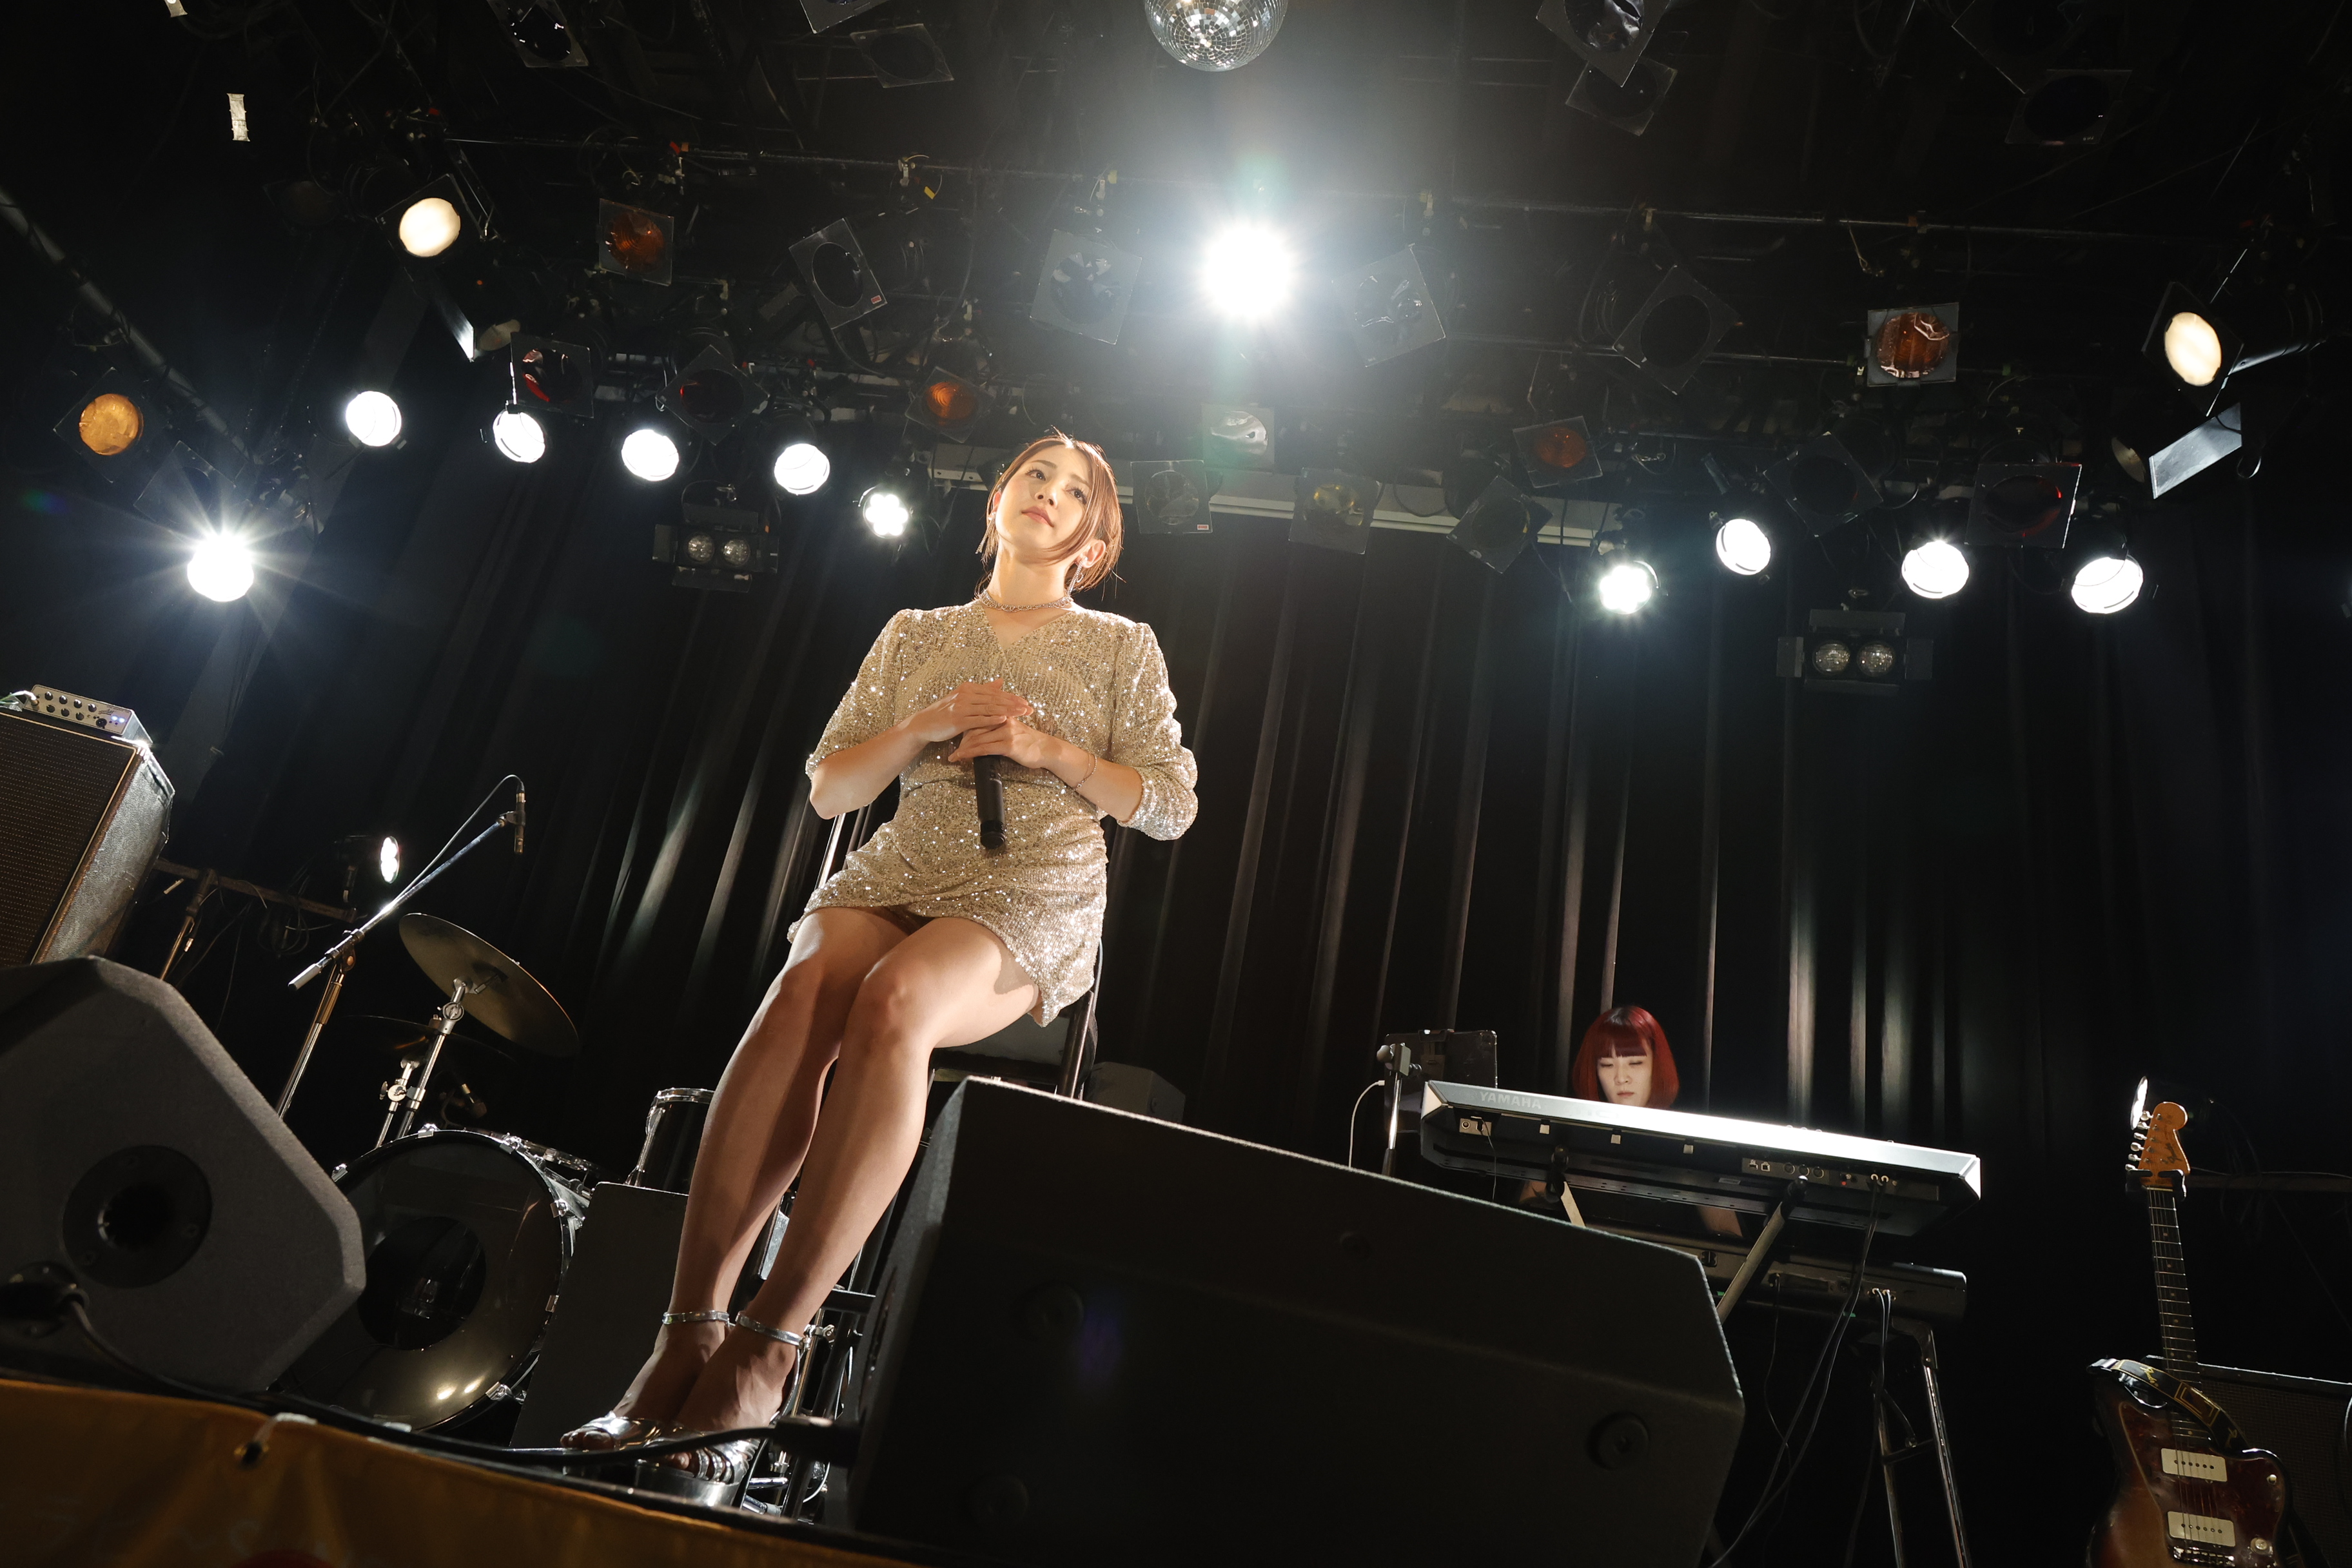 You Kikkawa performed her new song "どんな時も笑顔で" written by Takui Nakajima